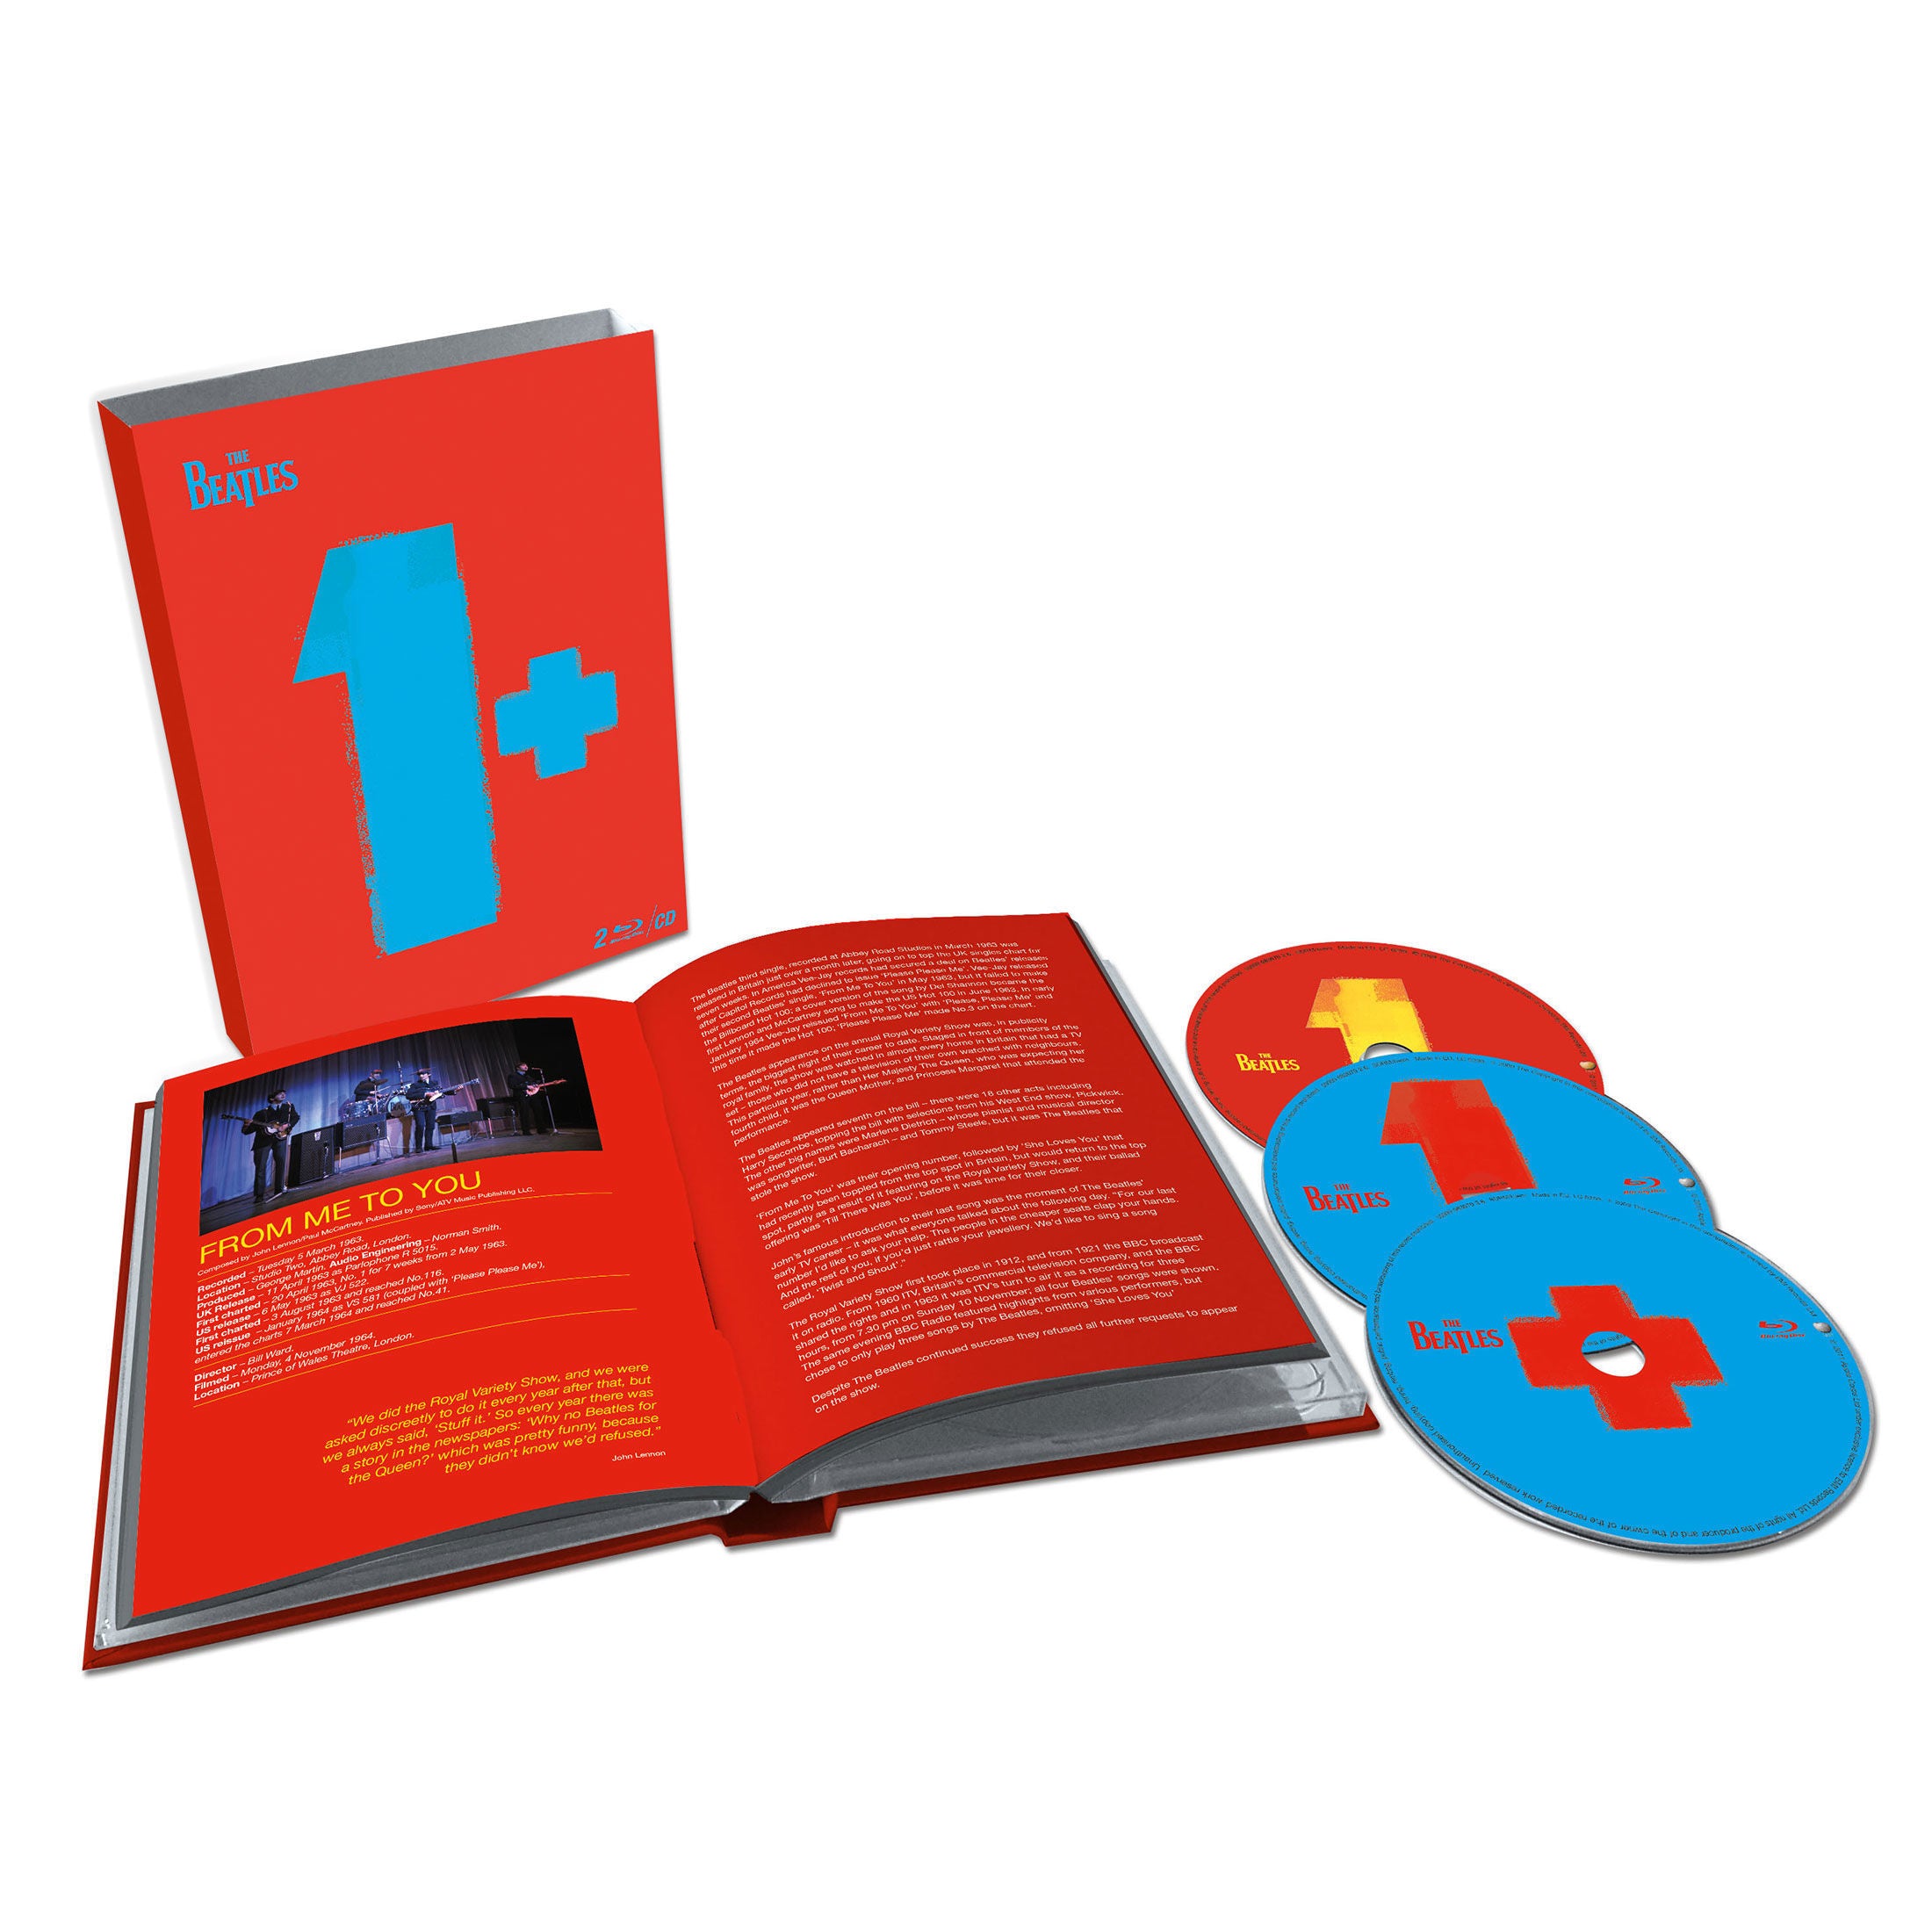 The Beatles - 1+ (2015 CD & 2 x Blu-ray)